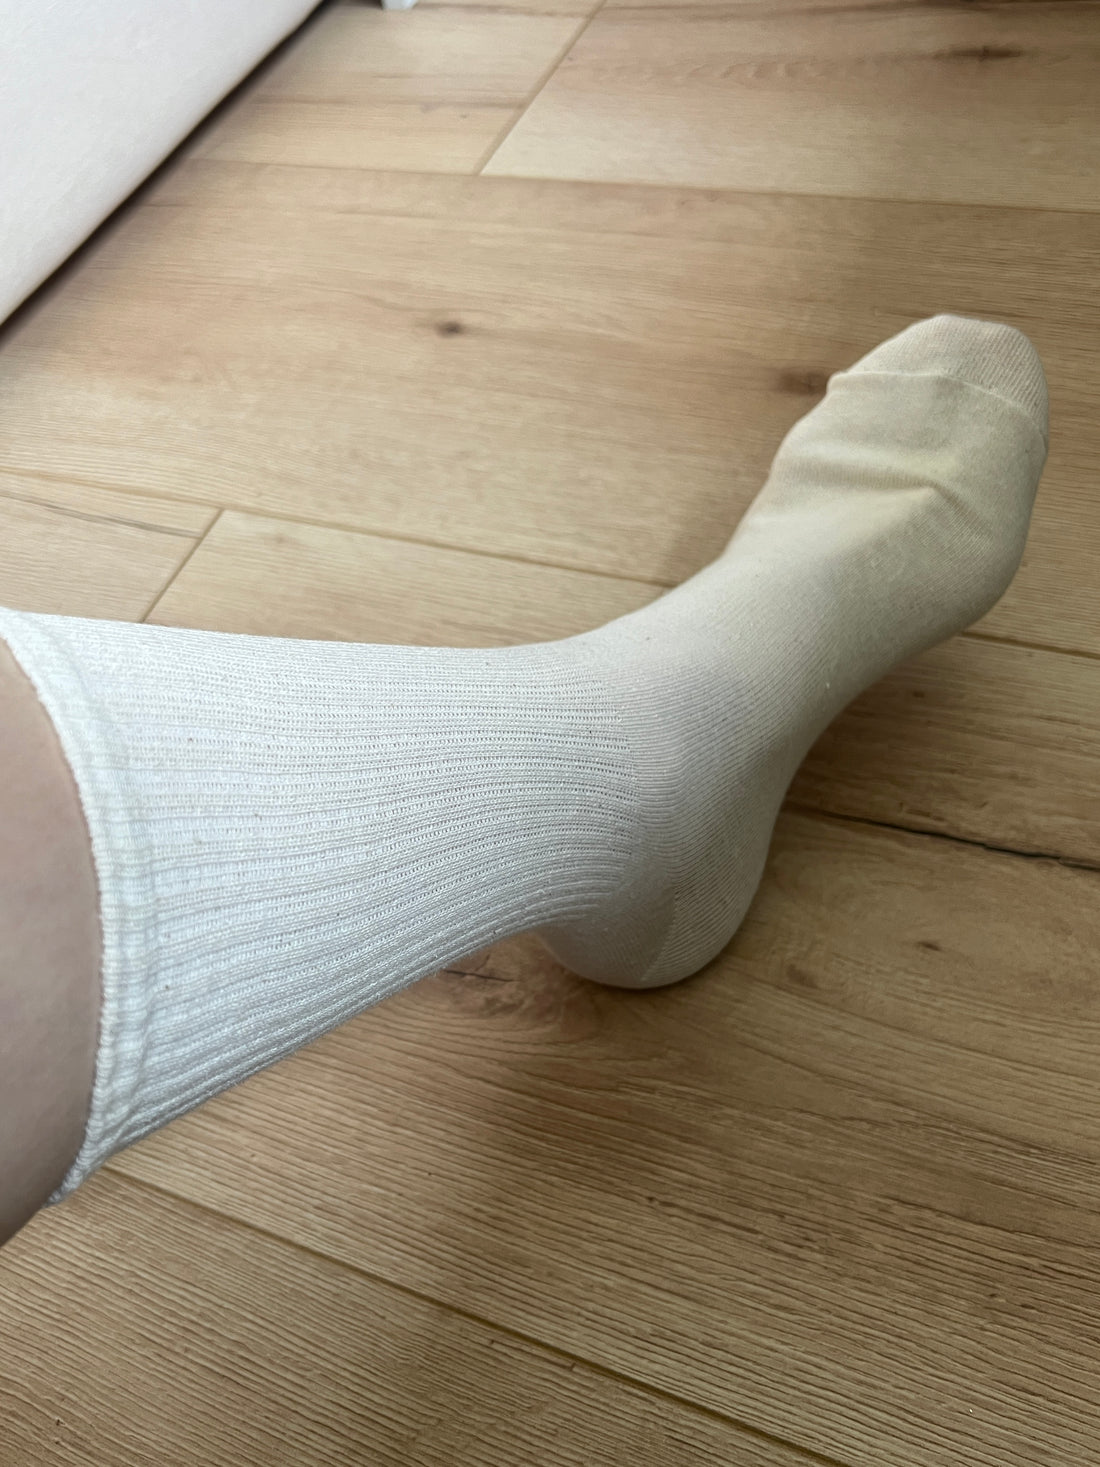 HEMP Socks long for Women Set of 4 pairs